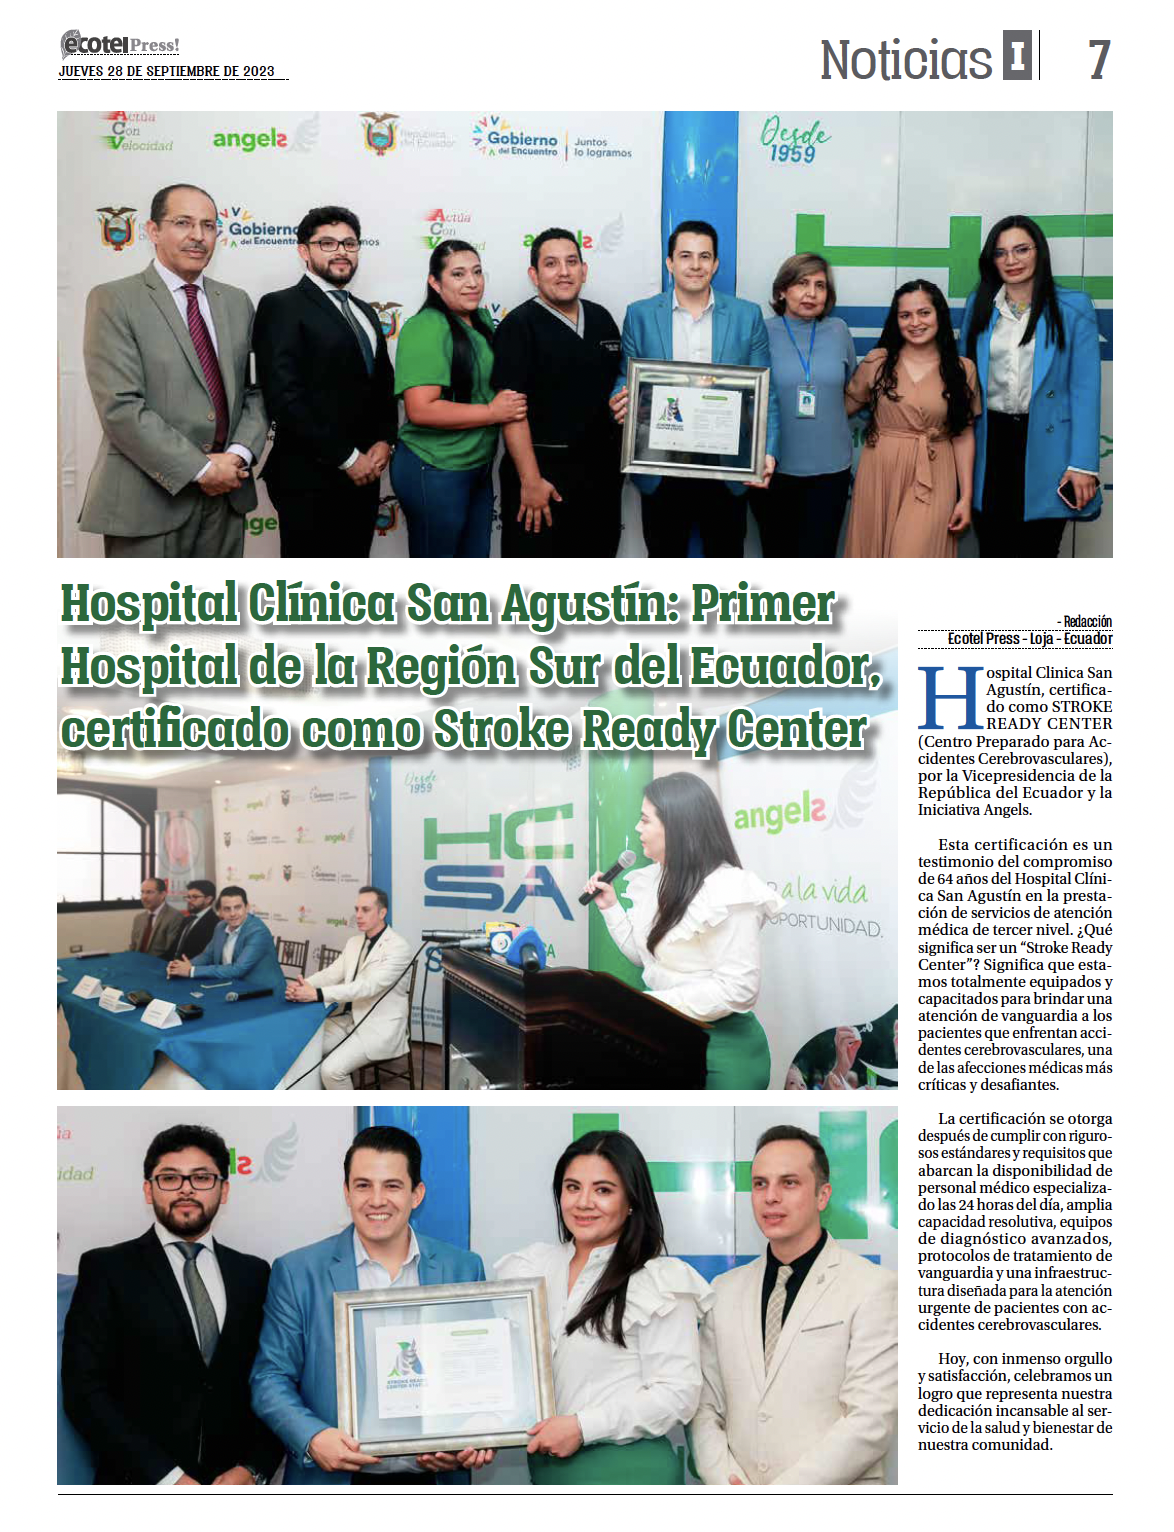 hospital clinica san agustin primer region sur ecuador stroke ready center